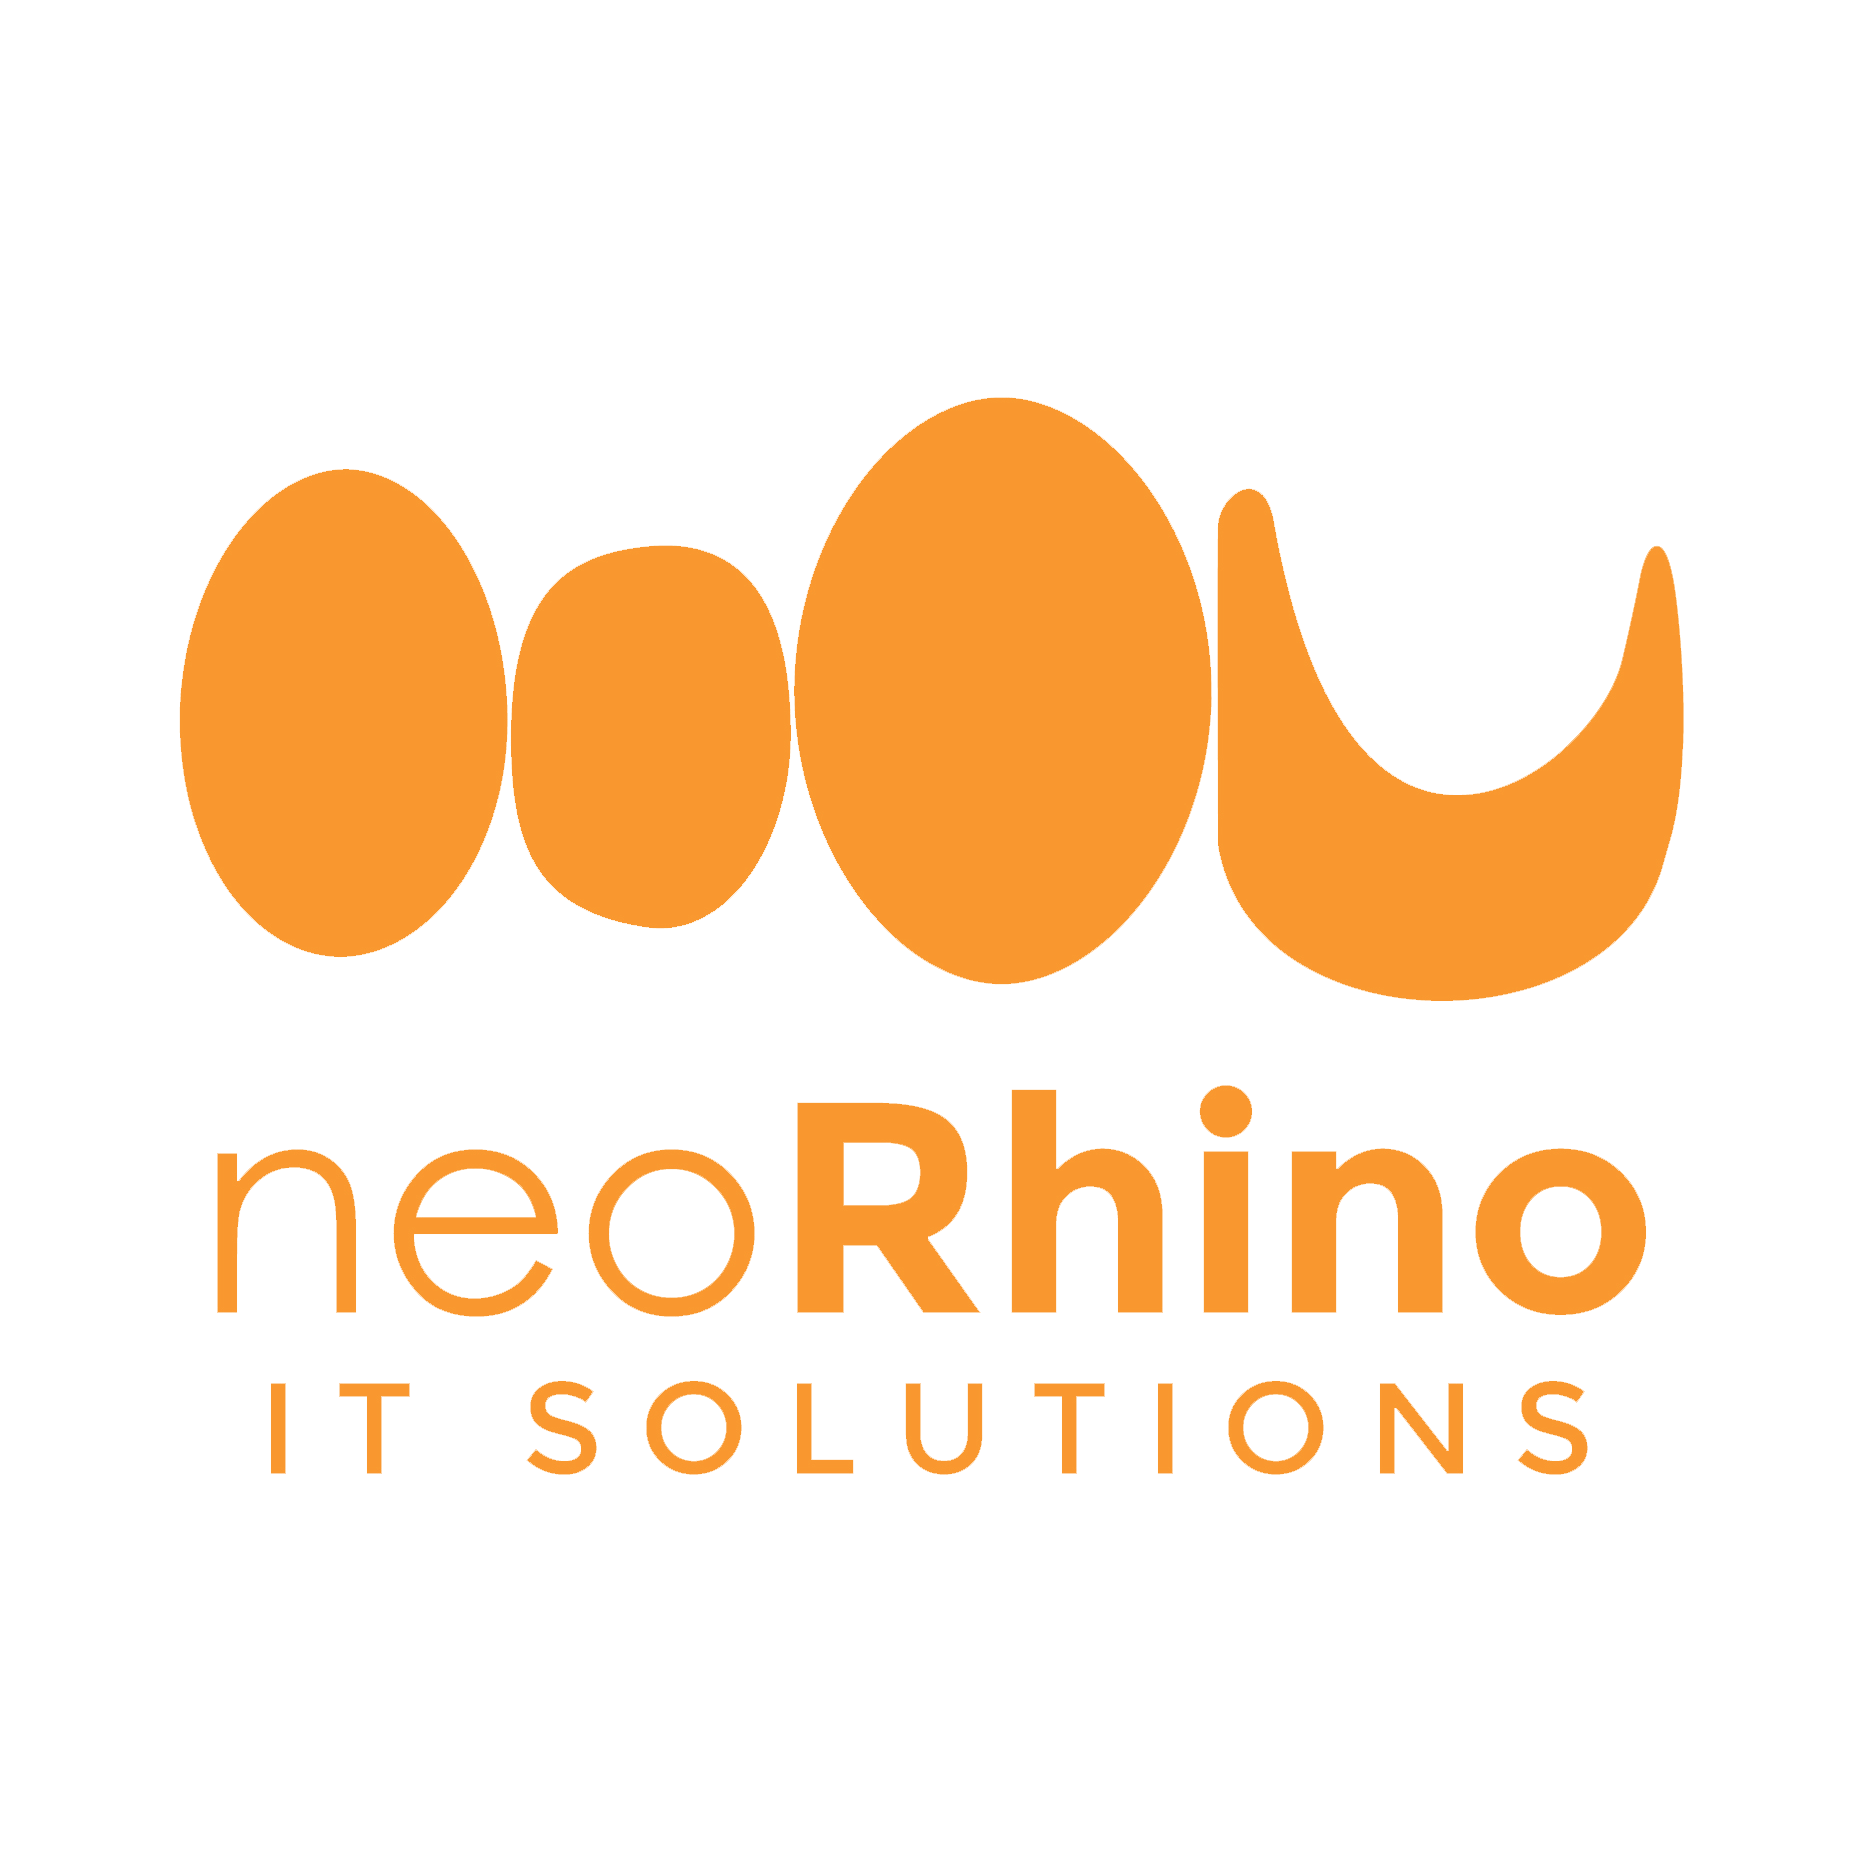 neoRhino IT Solutions